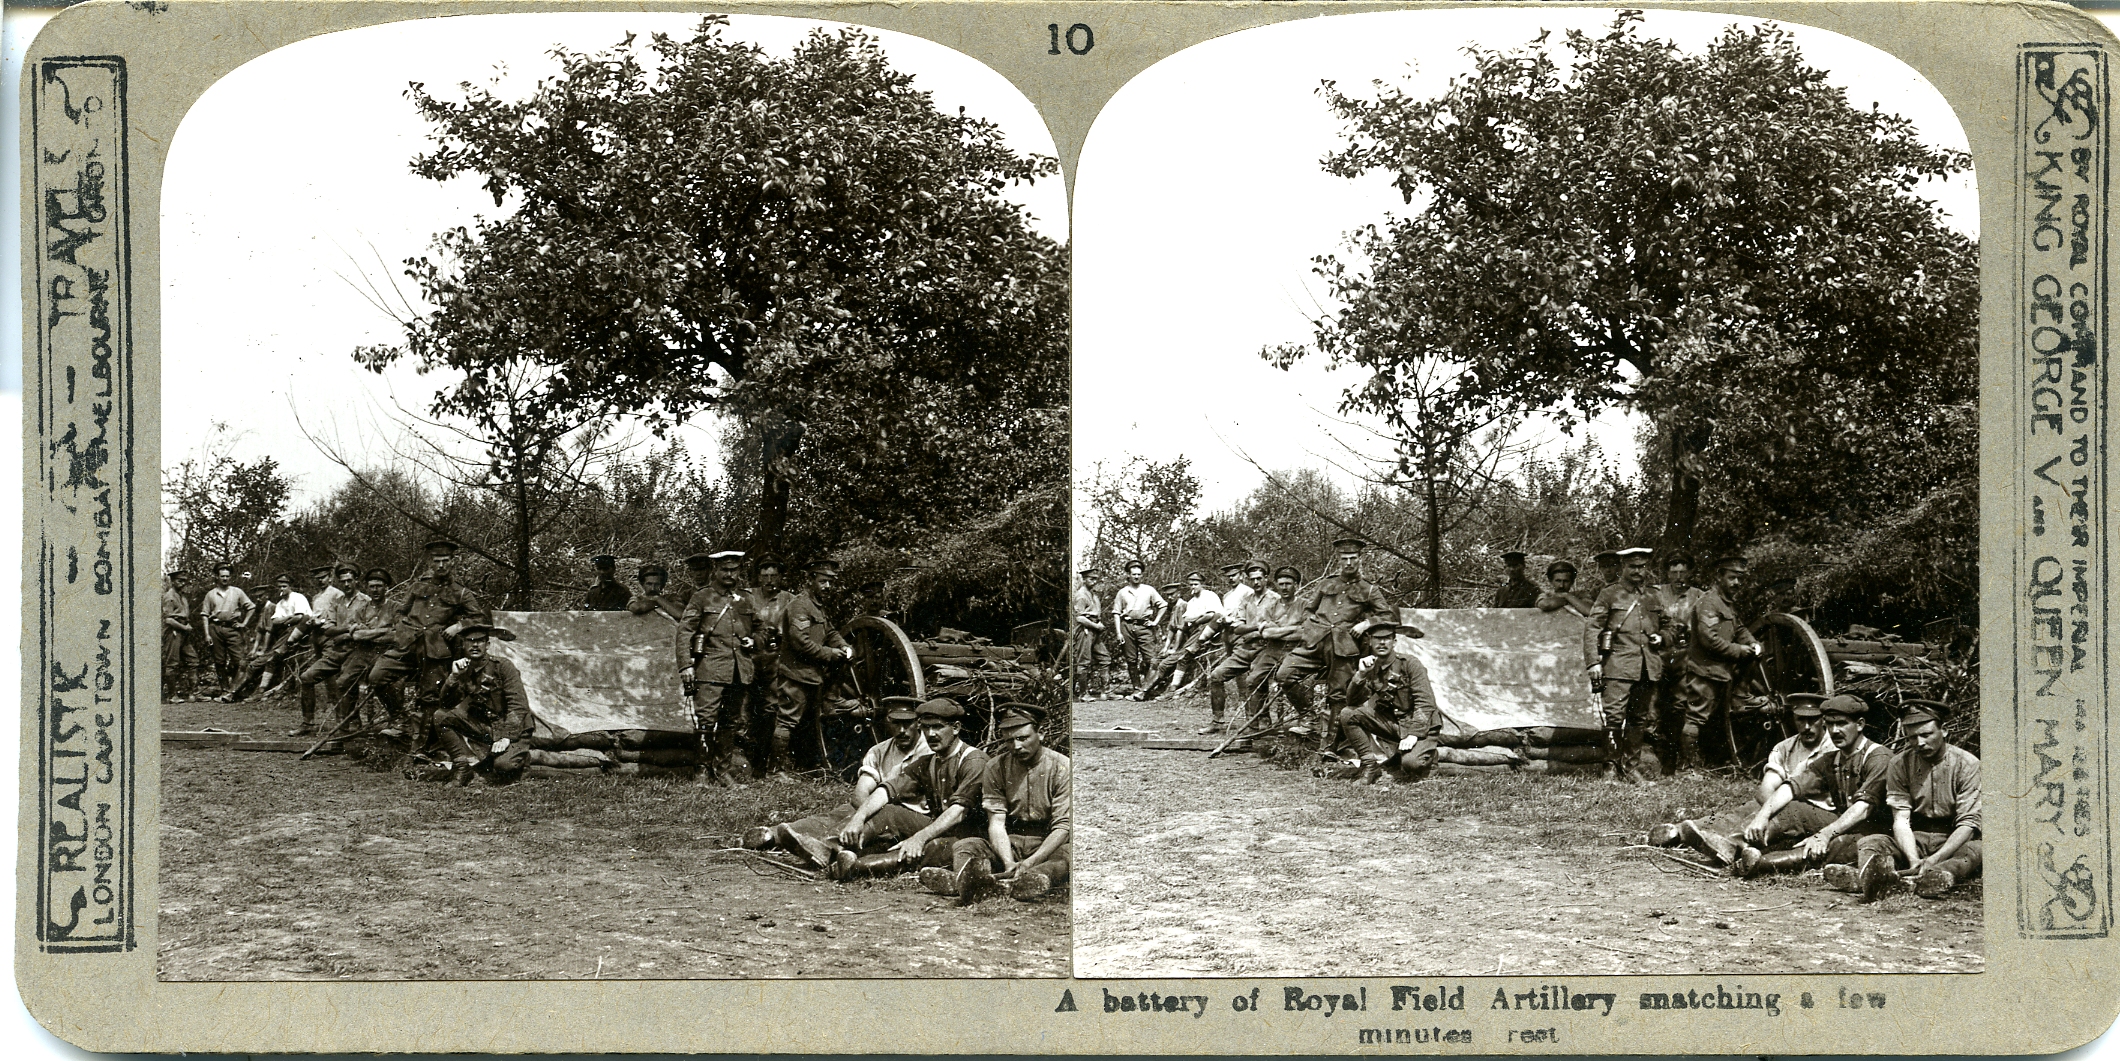 A battery of Royal Field Artillery enjoy a few hours' rest under concealment of a wood